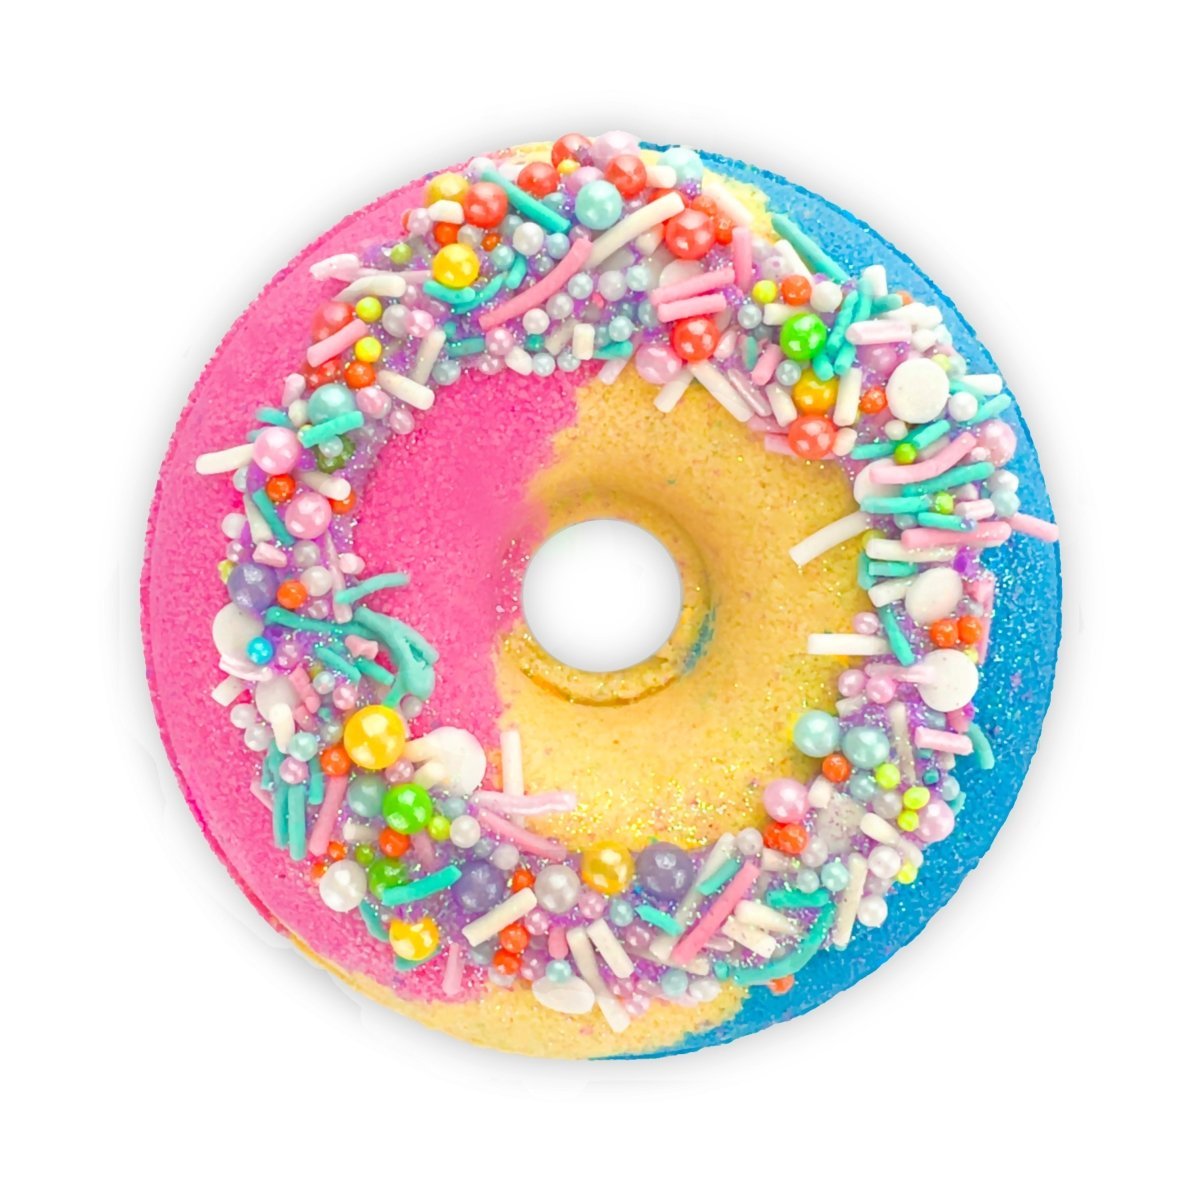 Sugar Donut Bath Bomb for Kids & Adults - Colourful Sprinkles & Vanilla Sugar Fragrance - Made in Australia by Bath Box